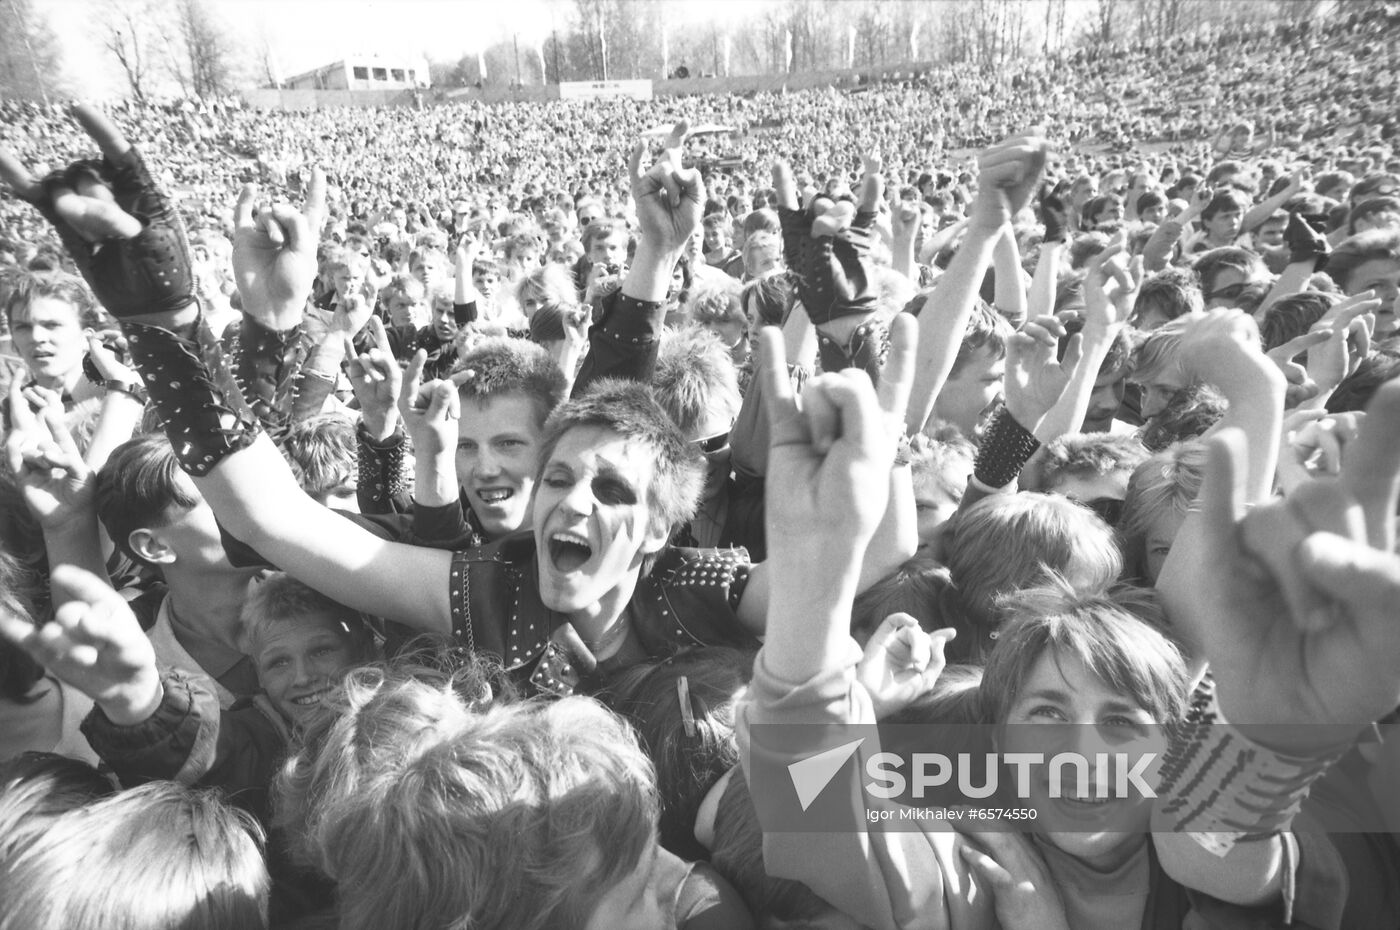 Rock Summer international music festival in Tallinn | Sputnik Mediabank